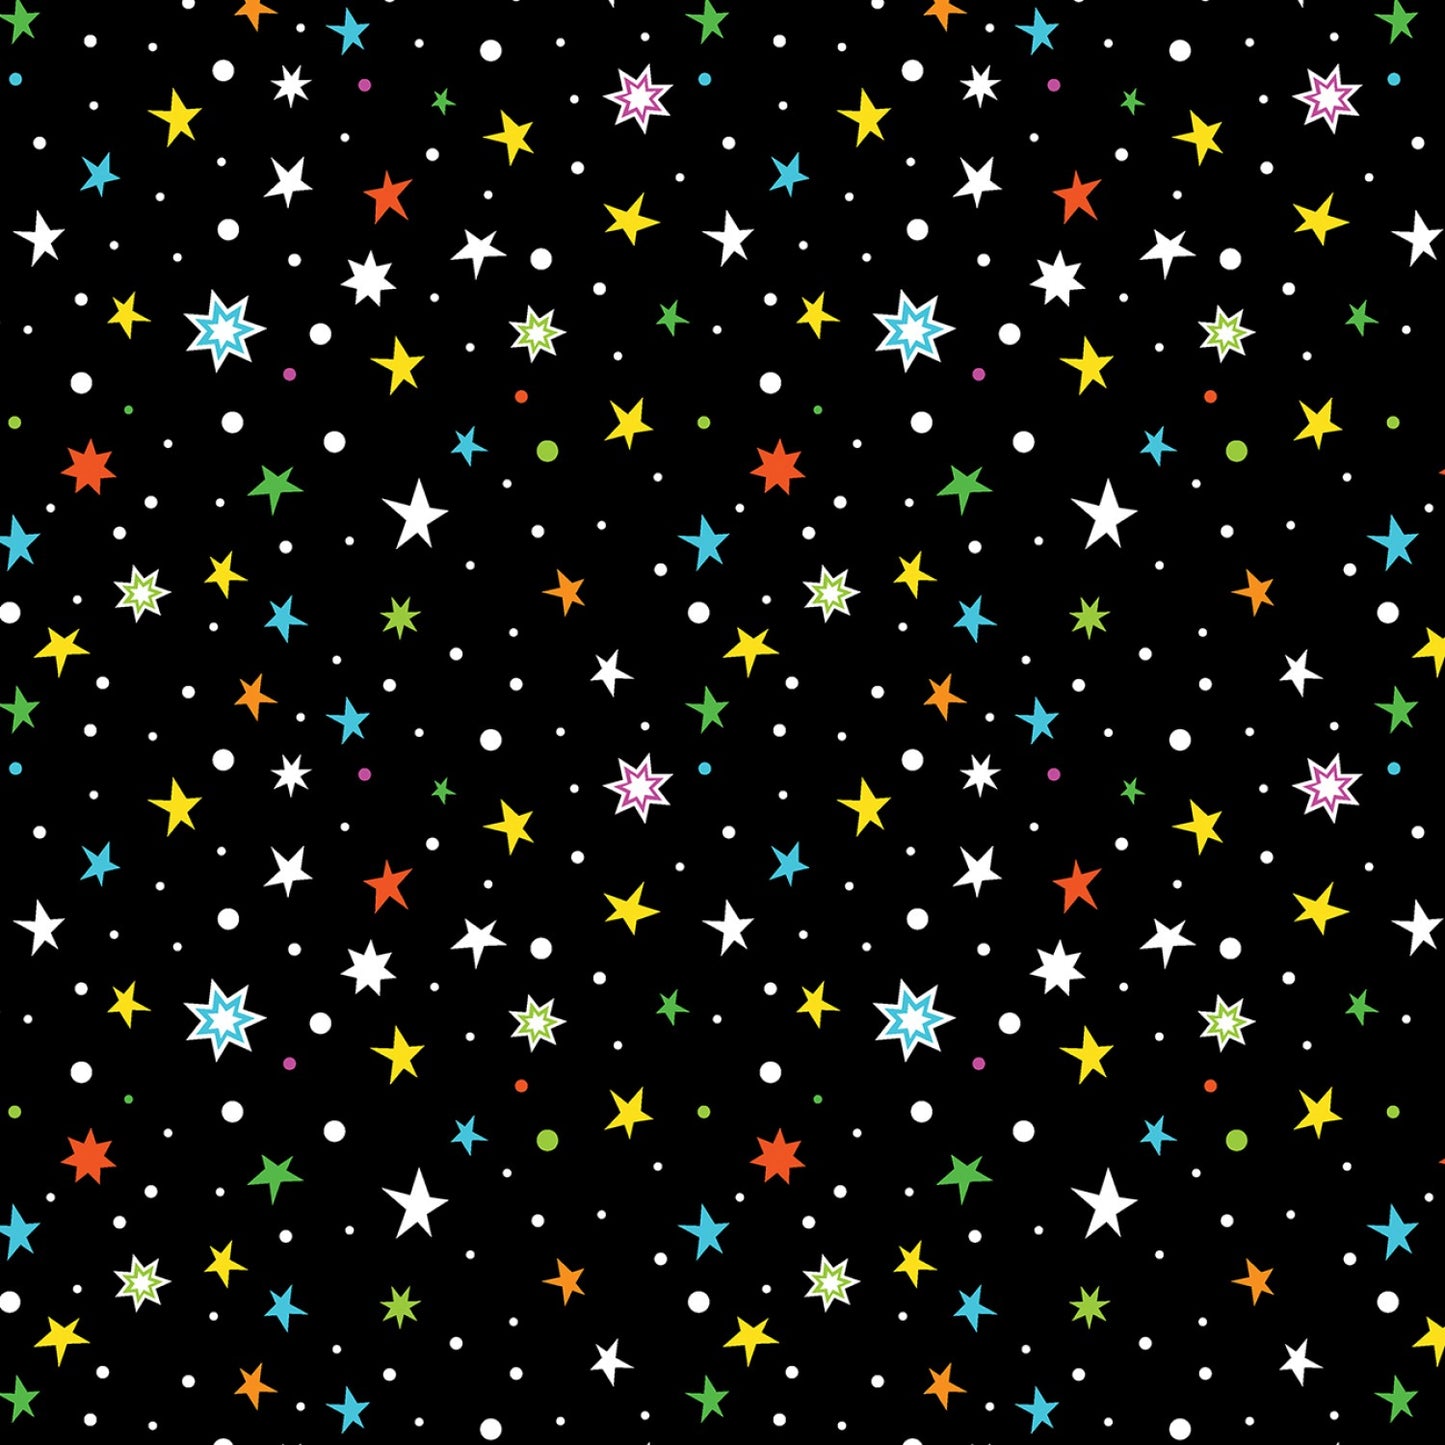 Lift Off Glow in the Dark Star Gazing Black Glows in the Dark  12609GB-12 Cotton Woven Fabric